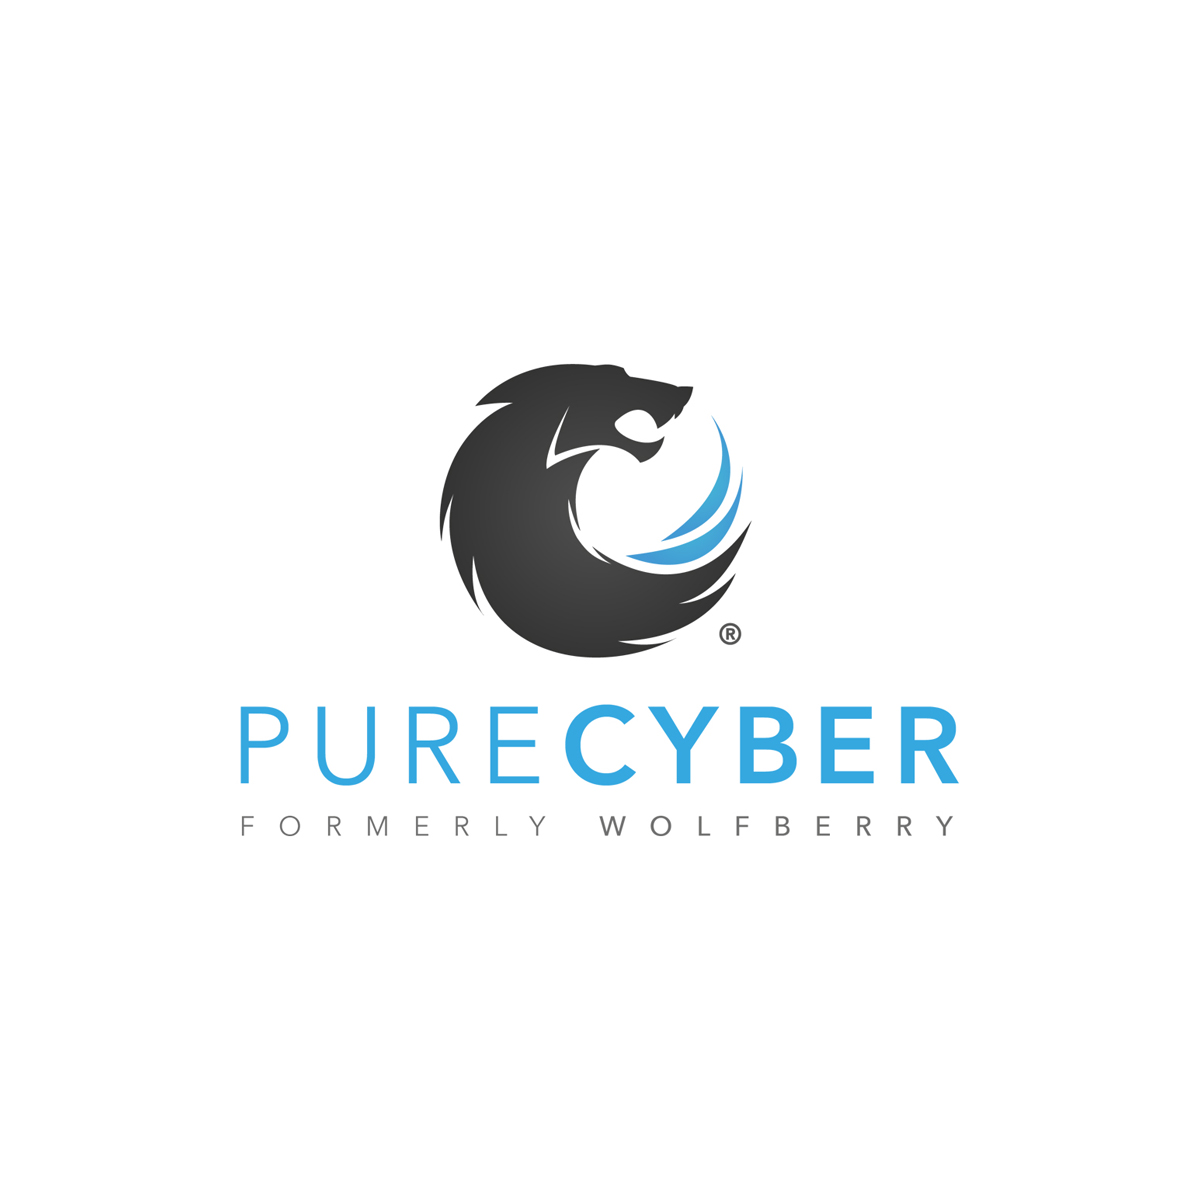 The Pure Cyber logo